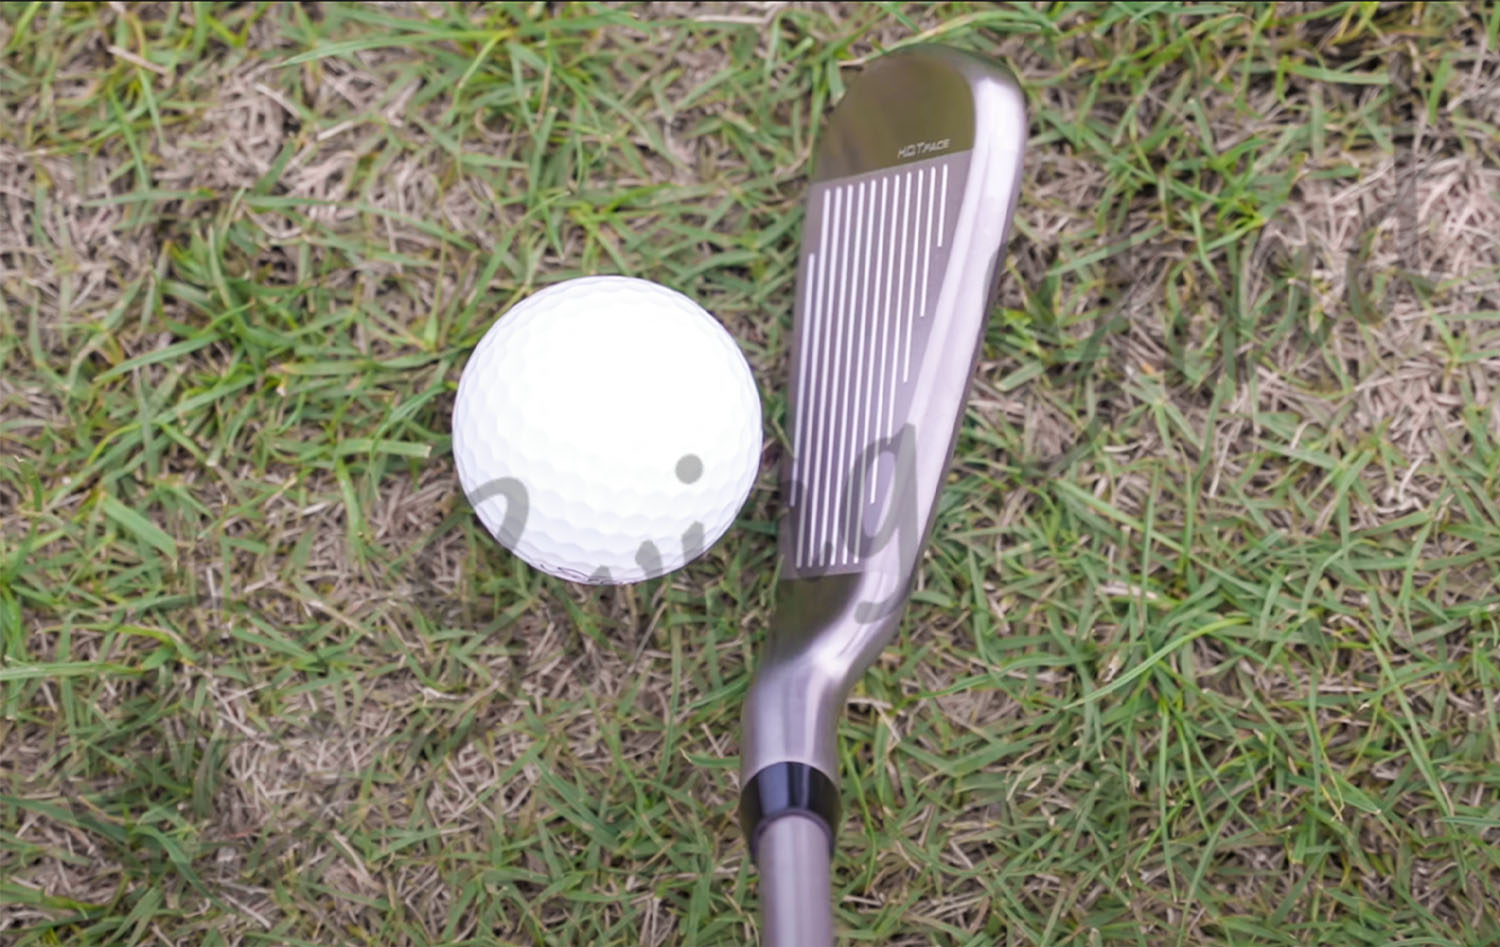 A facial view of Cobra AeroJet Iron hitting a golf ball in the grass